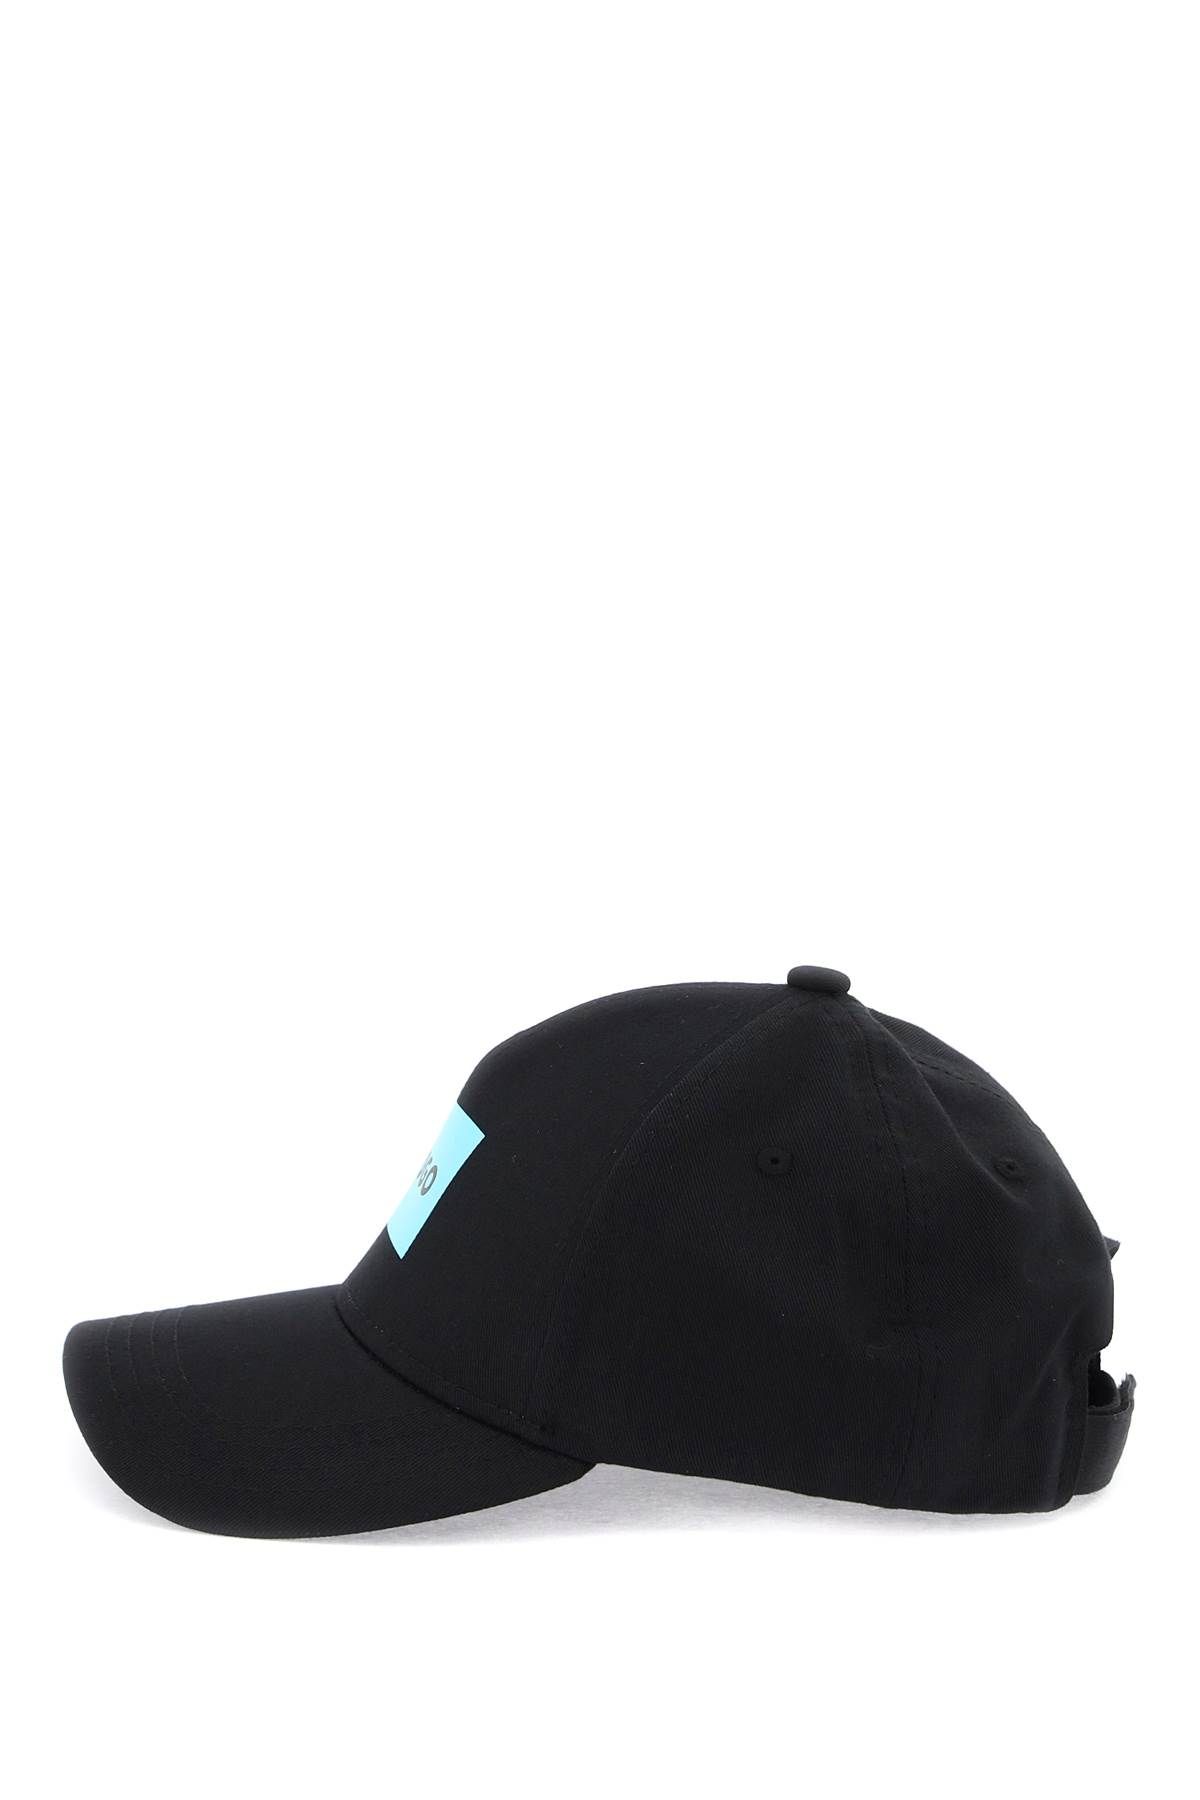 Shop Hugo Baseball Cap With Patch Design In Black